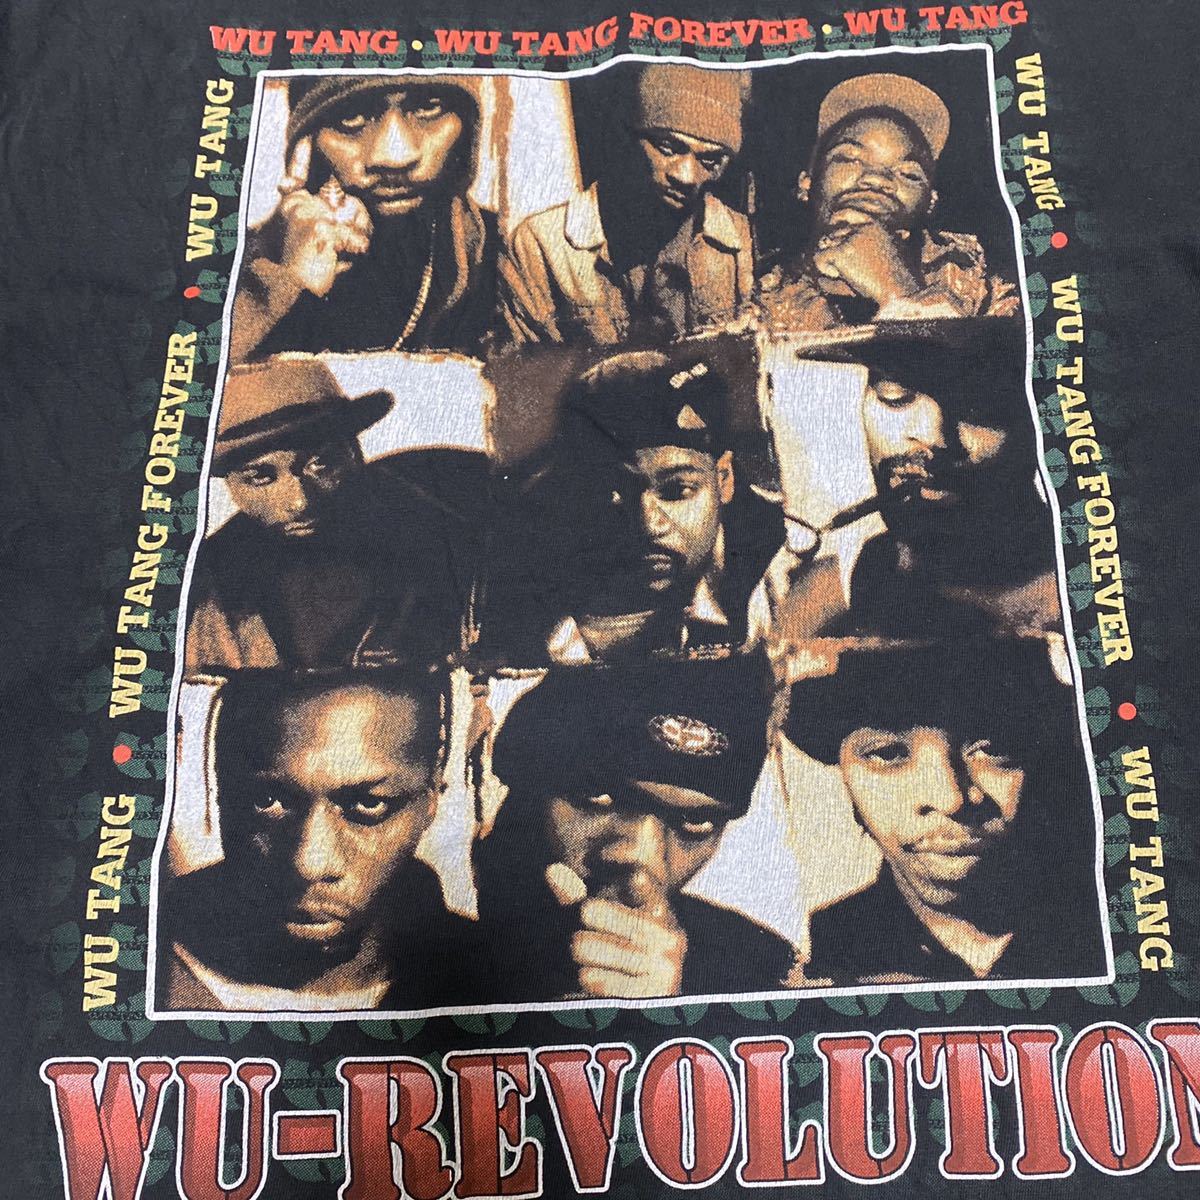 90S WU TANG CLAN WU-REVOLUTION Bootleg Vintage tee shirt ウータンクラン ヴィンテージ ビンテージ Tシャツ raptee 2pac sade biggie_画像4